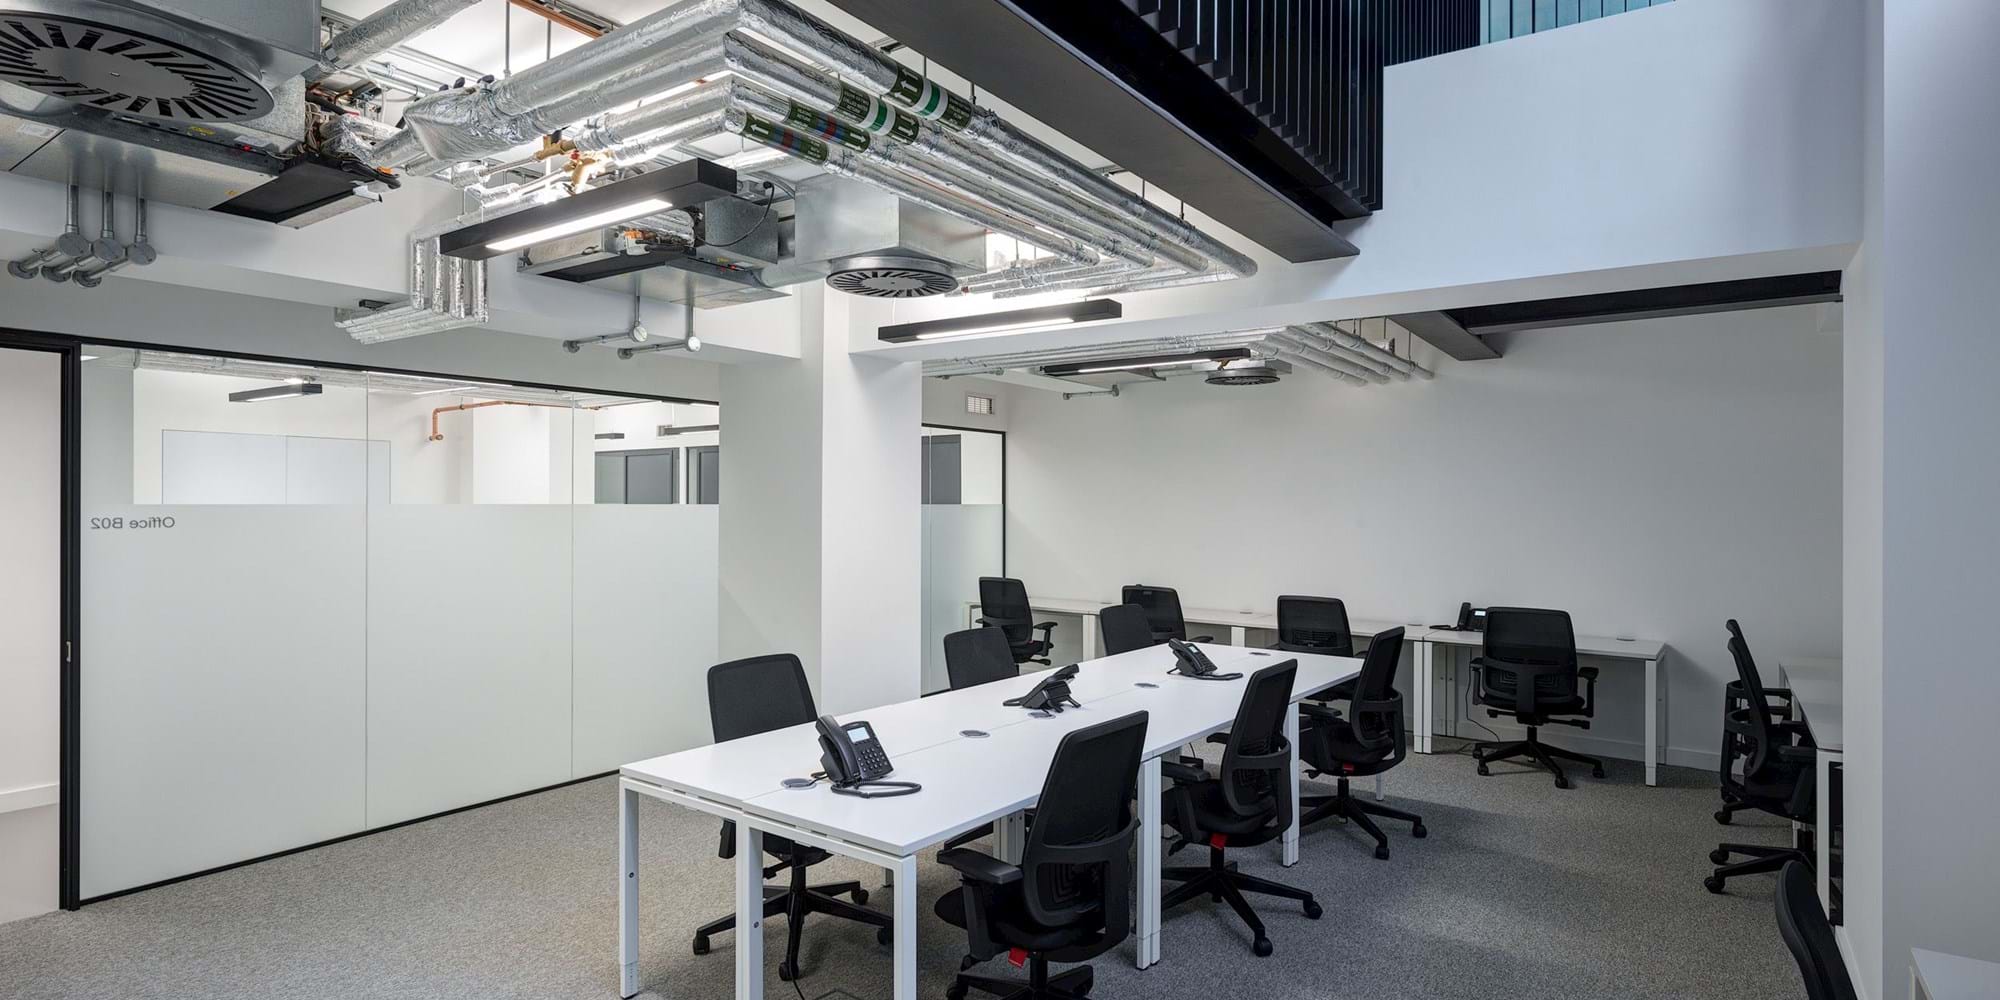 Modus Workspace office design, fit out and refurbishment - Regus spaces Epworth - Spaces Epworth 25 highres sRGB.jpg